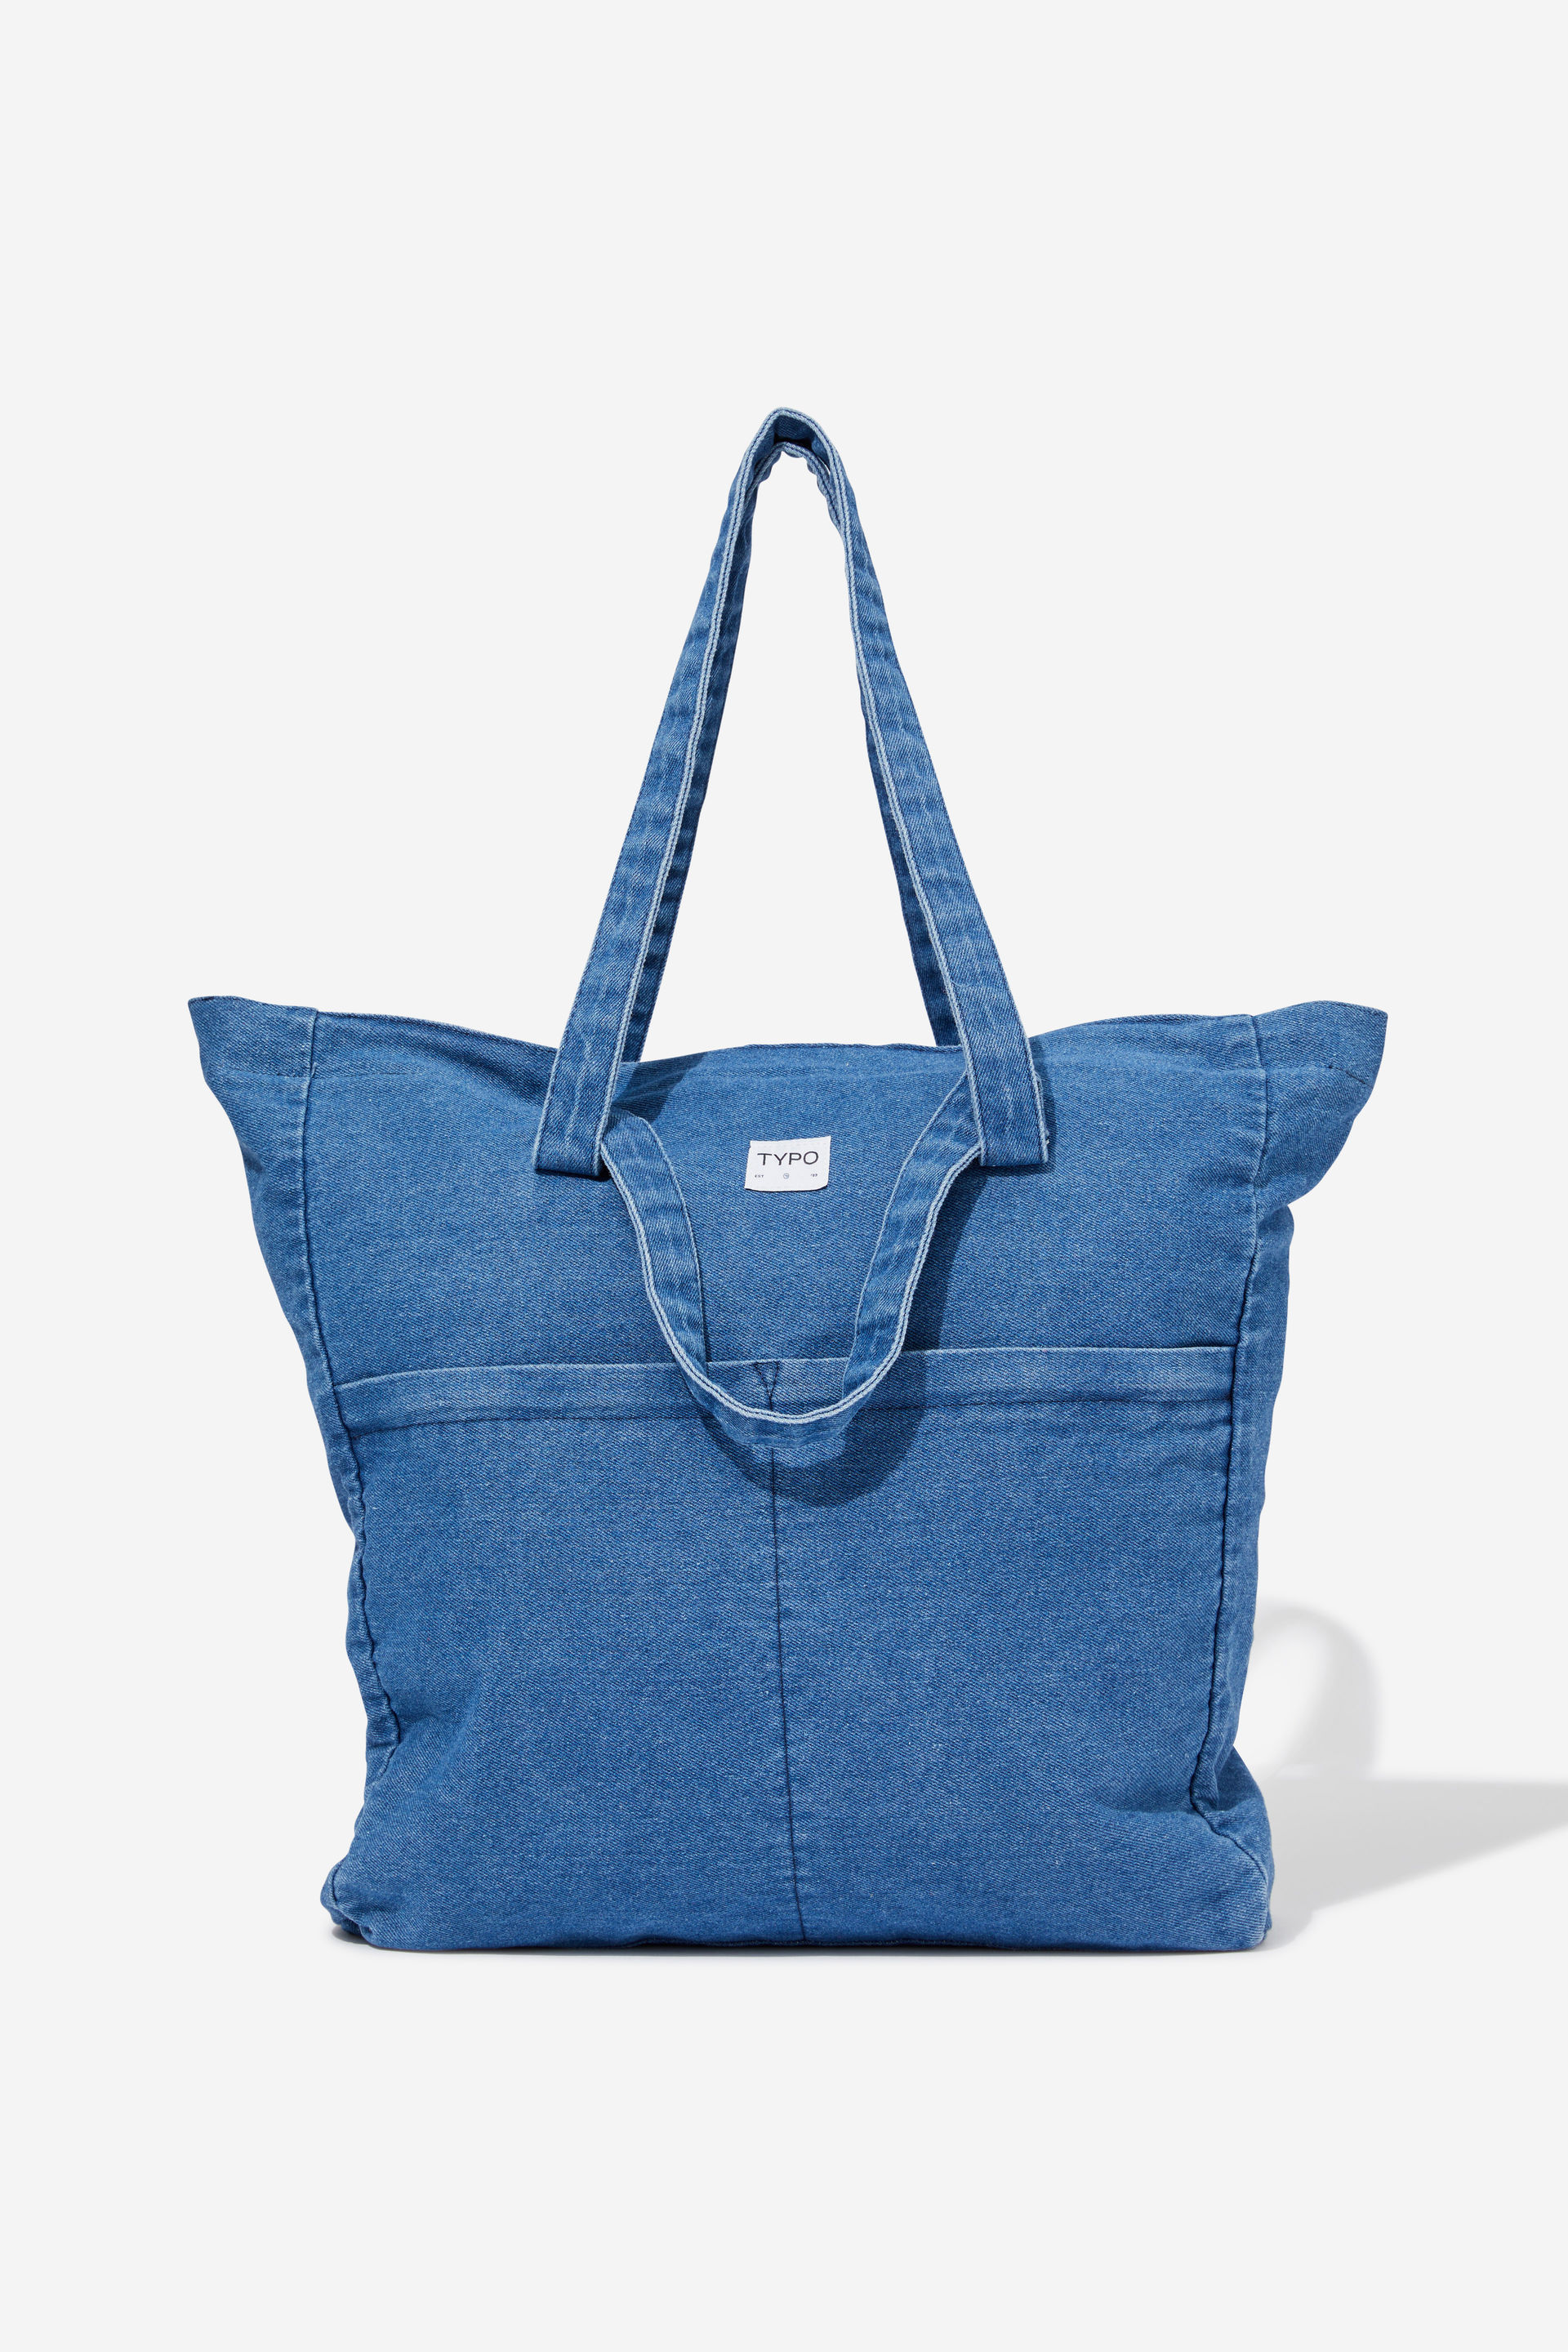 Typo - Wellness Tote Bag - Blue denim